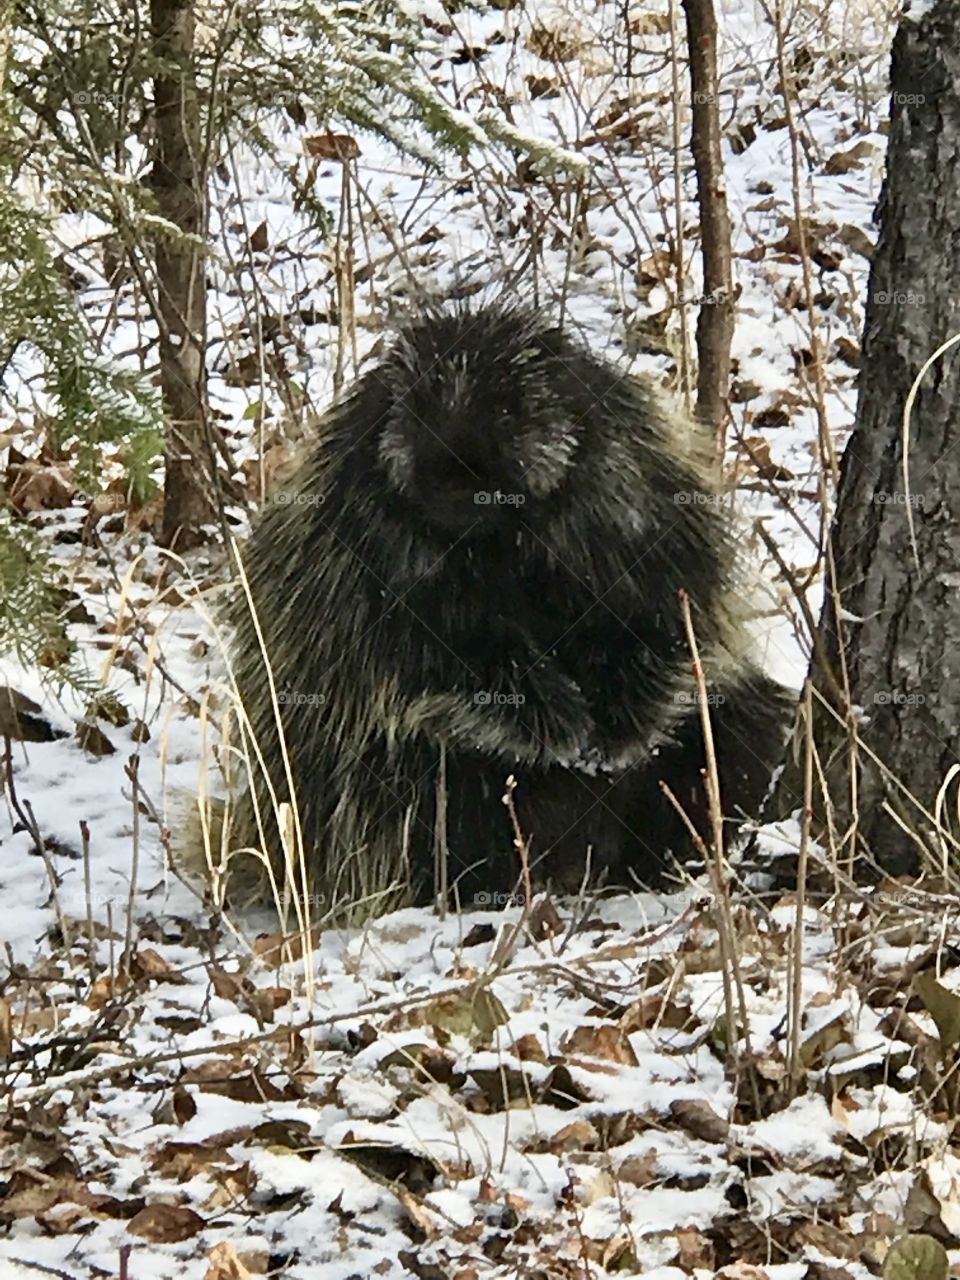 1st Cabin visitor - plump porcupine!